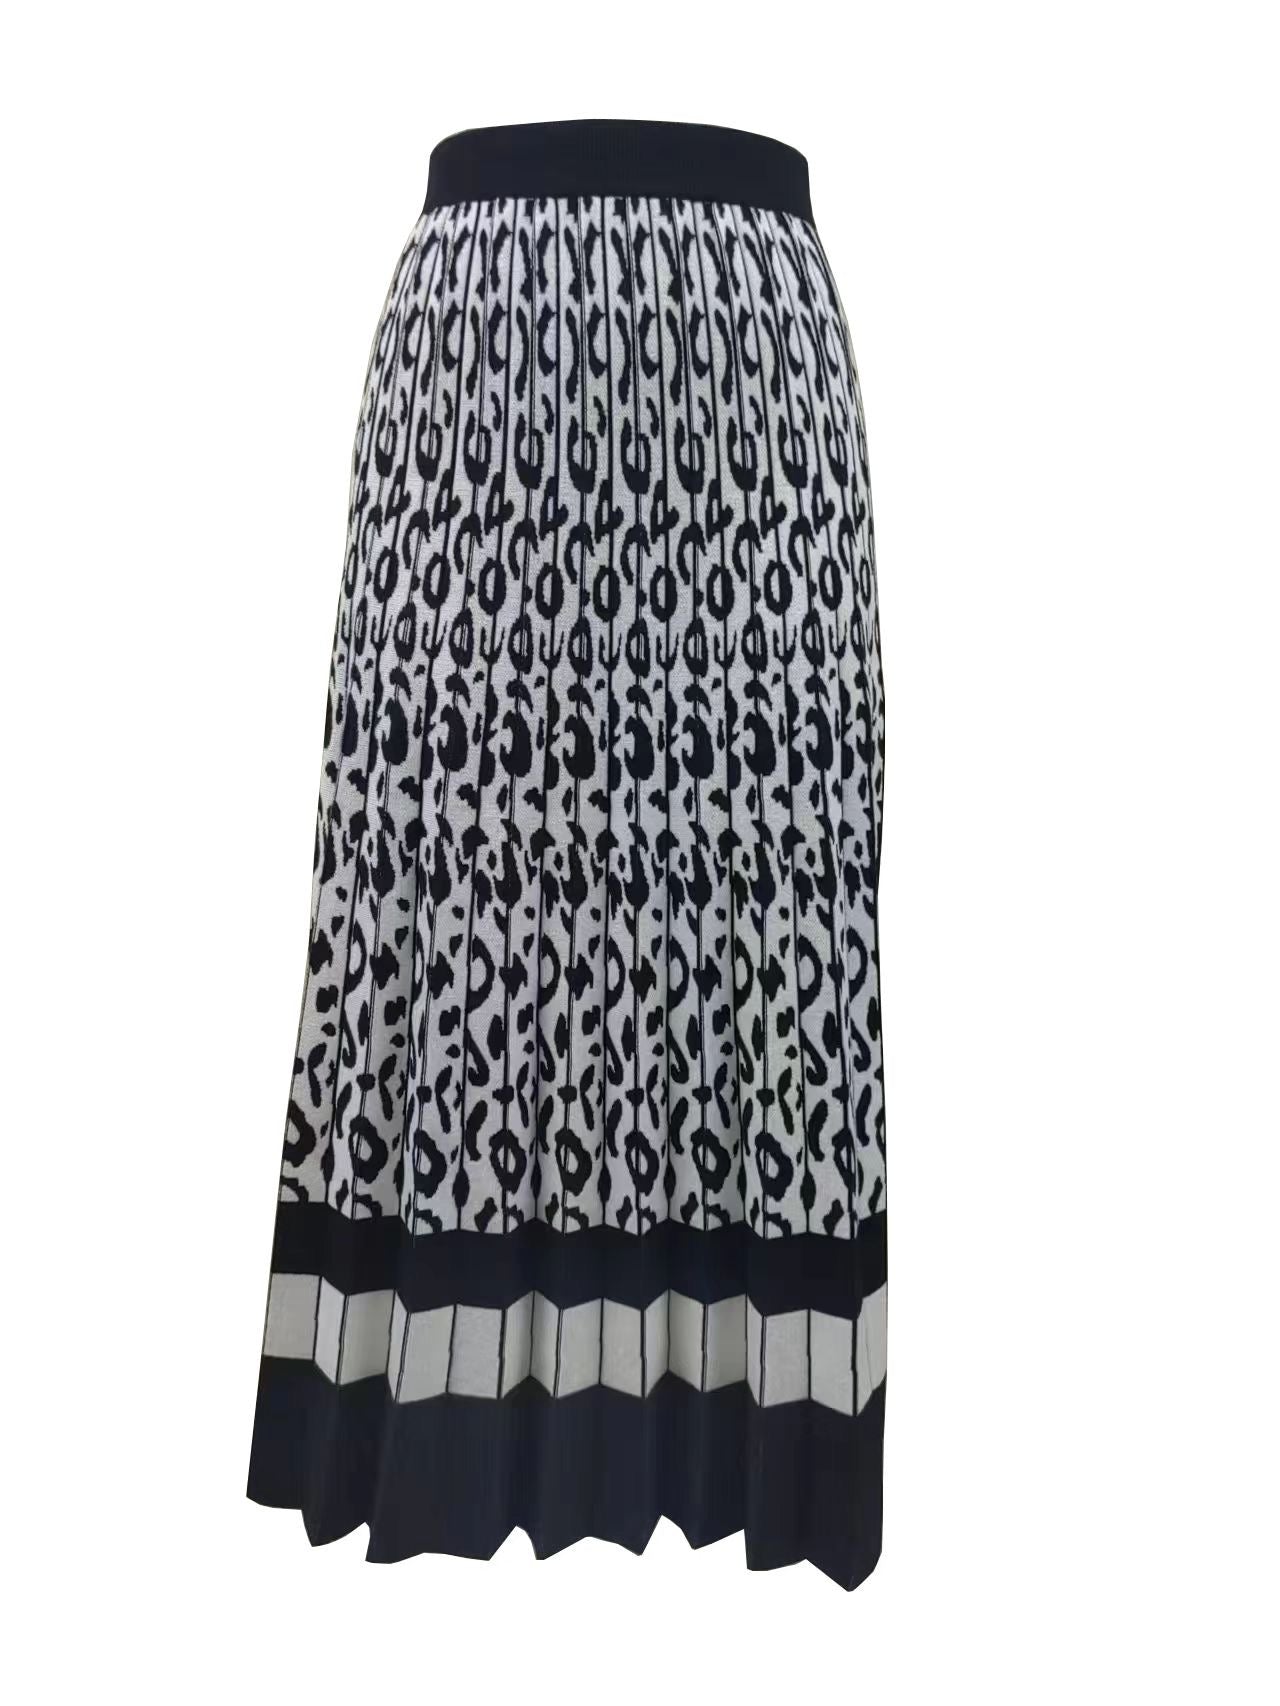 Monochrome Knitted Skirt - alamaud